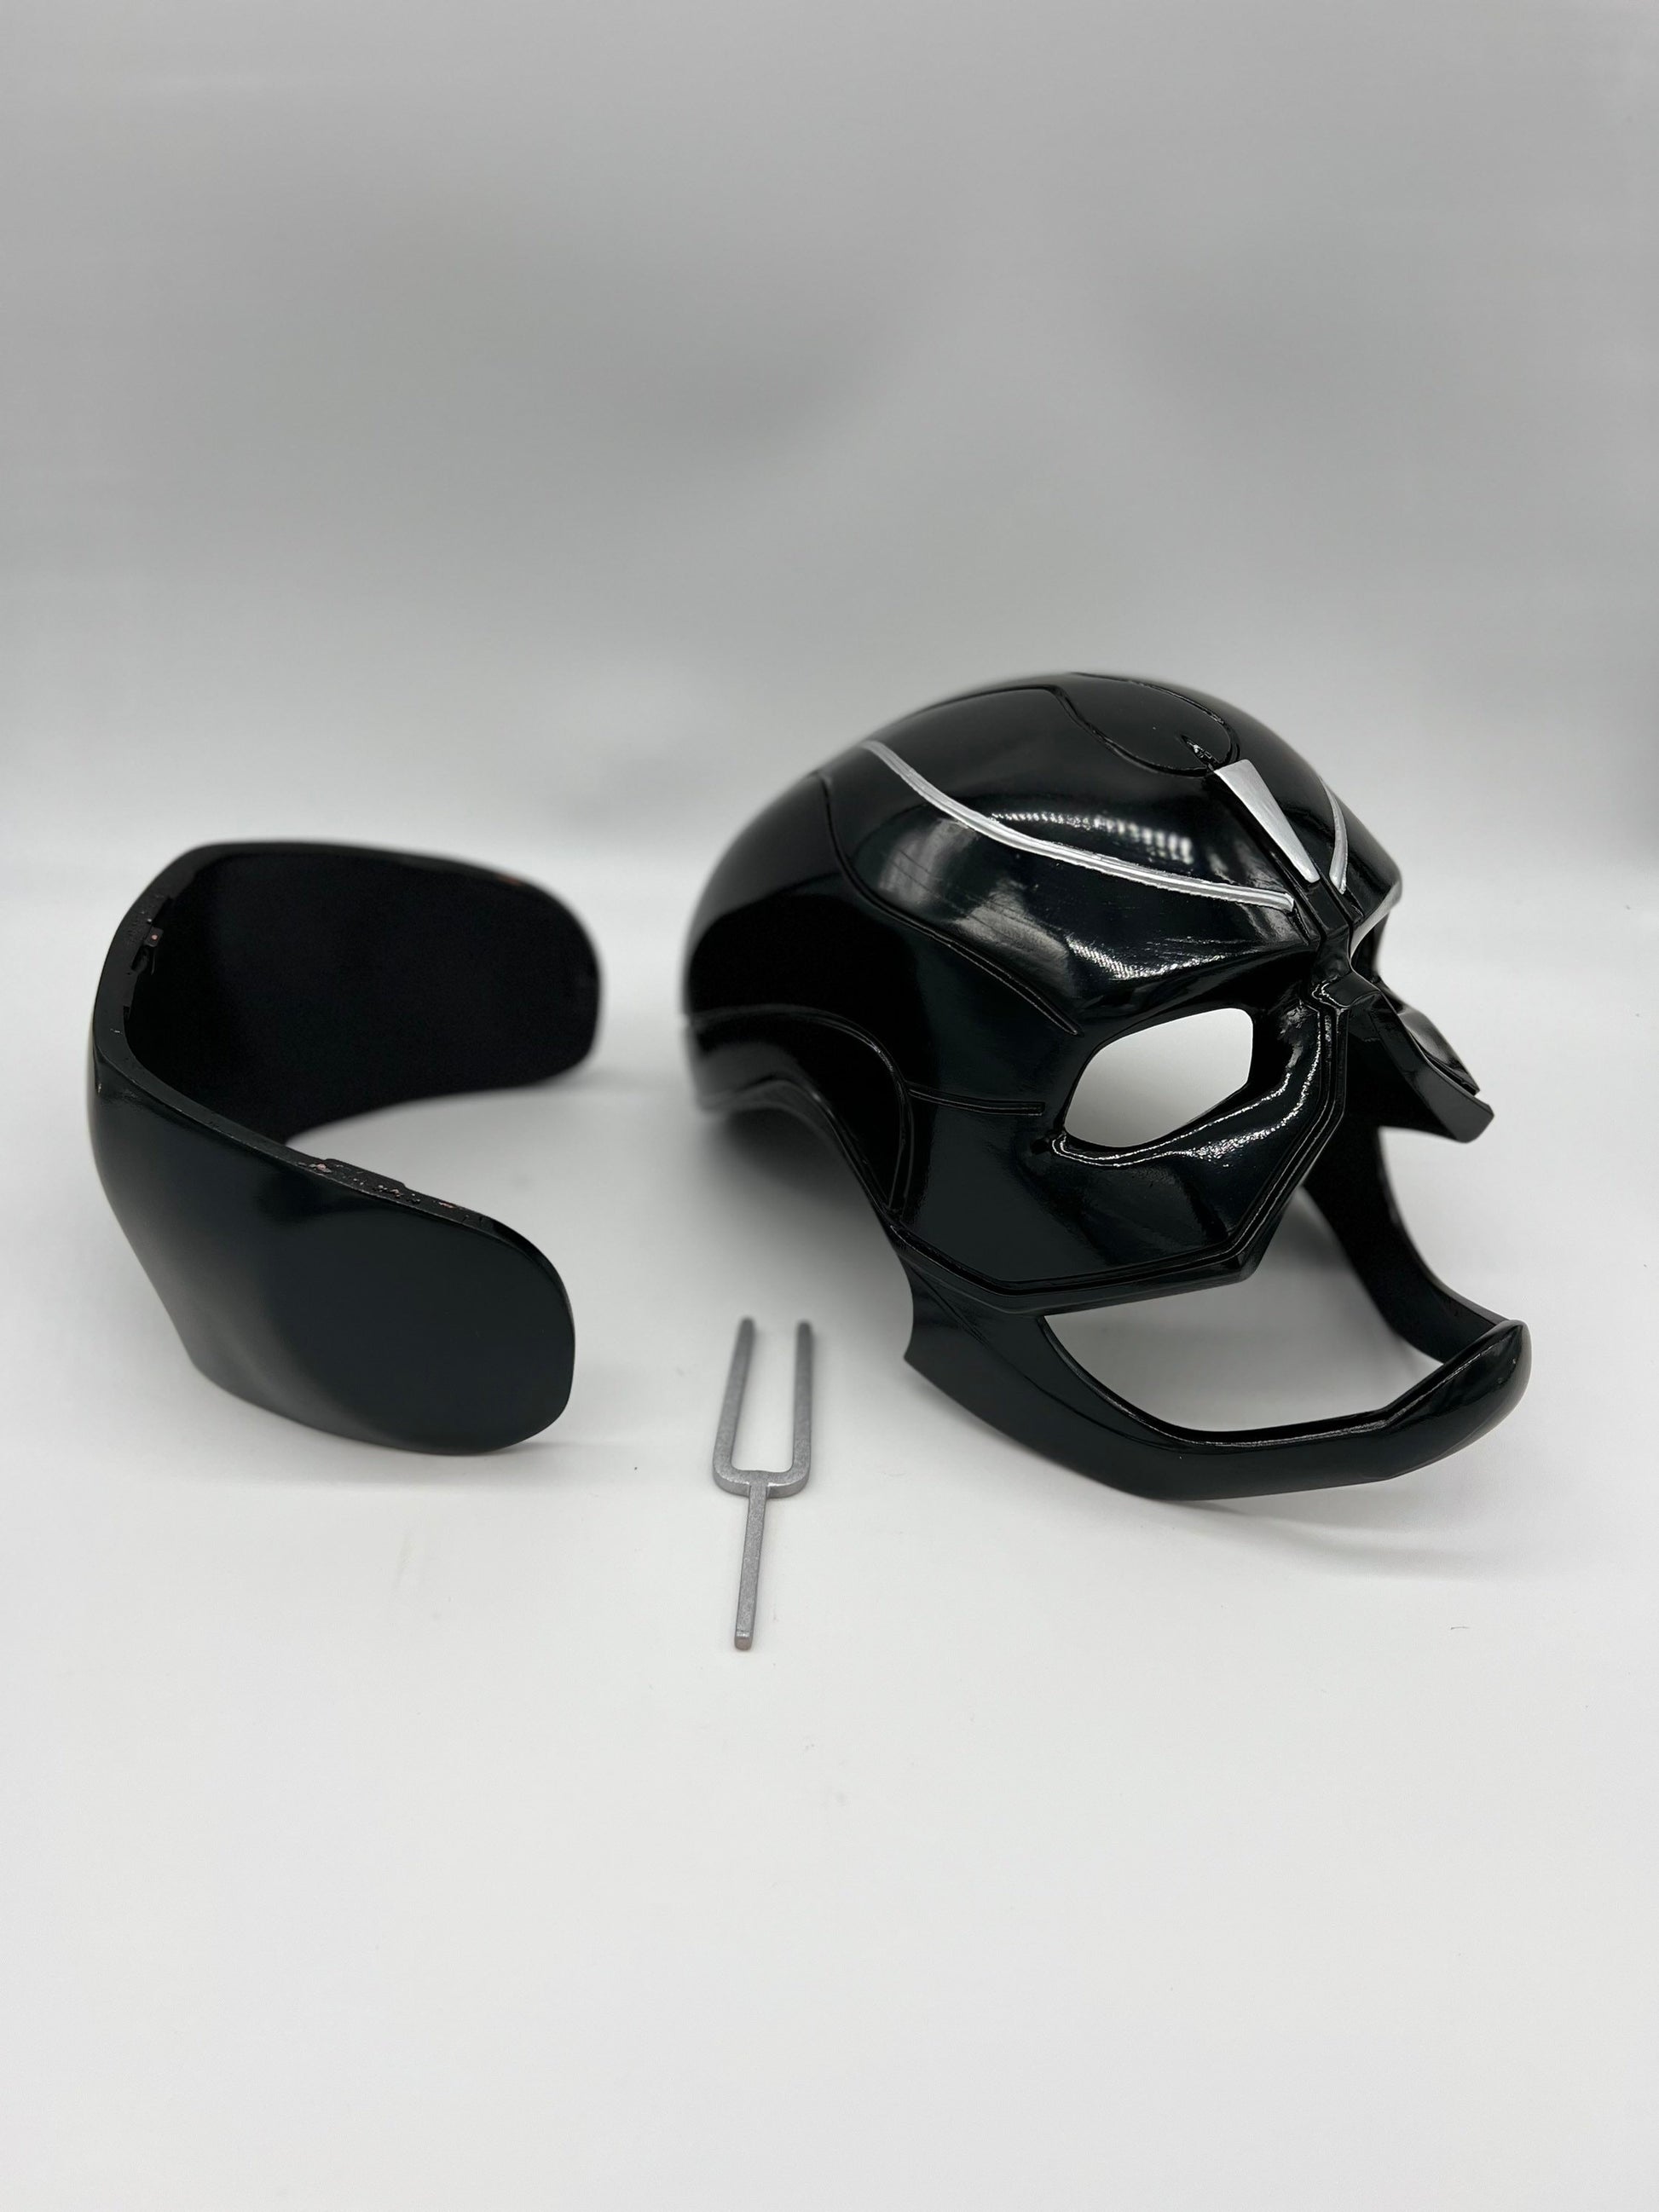 Black Bolt Cosplay Helmet